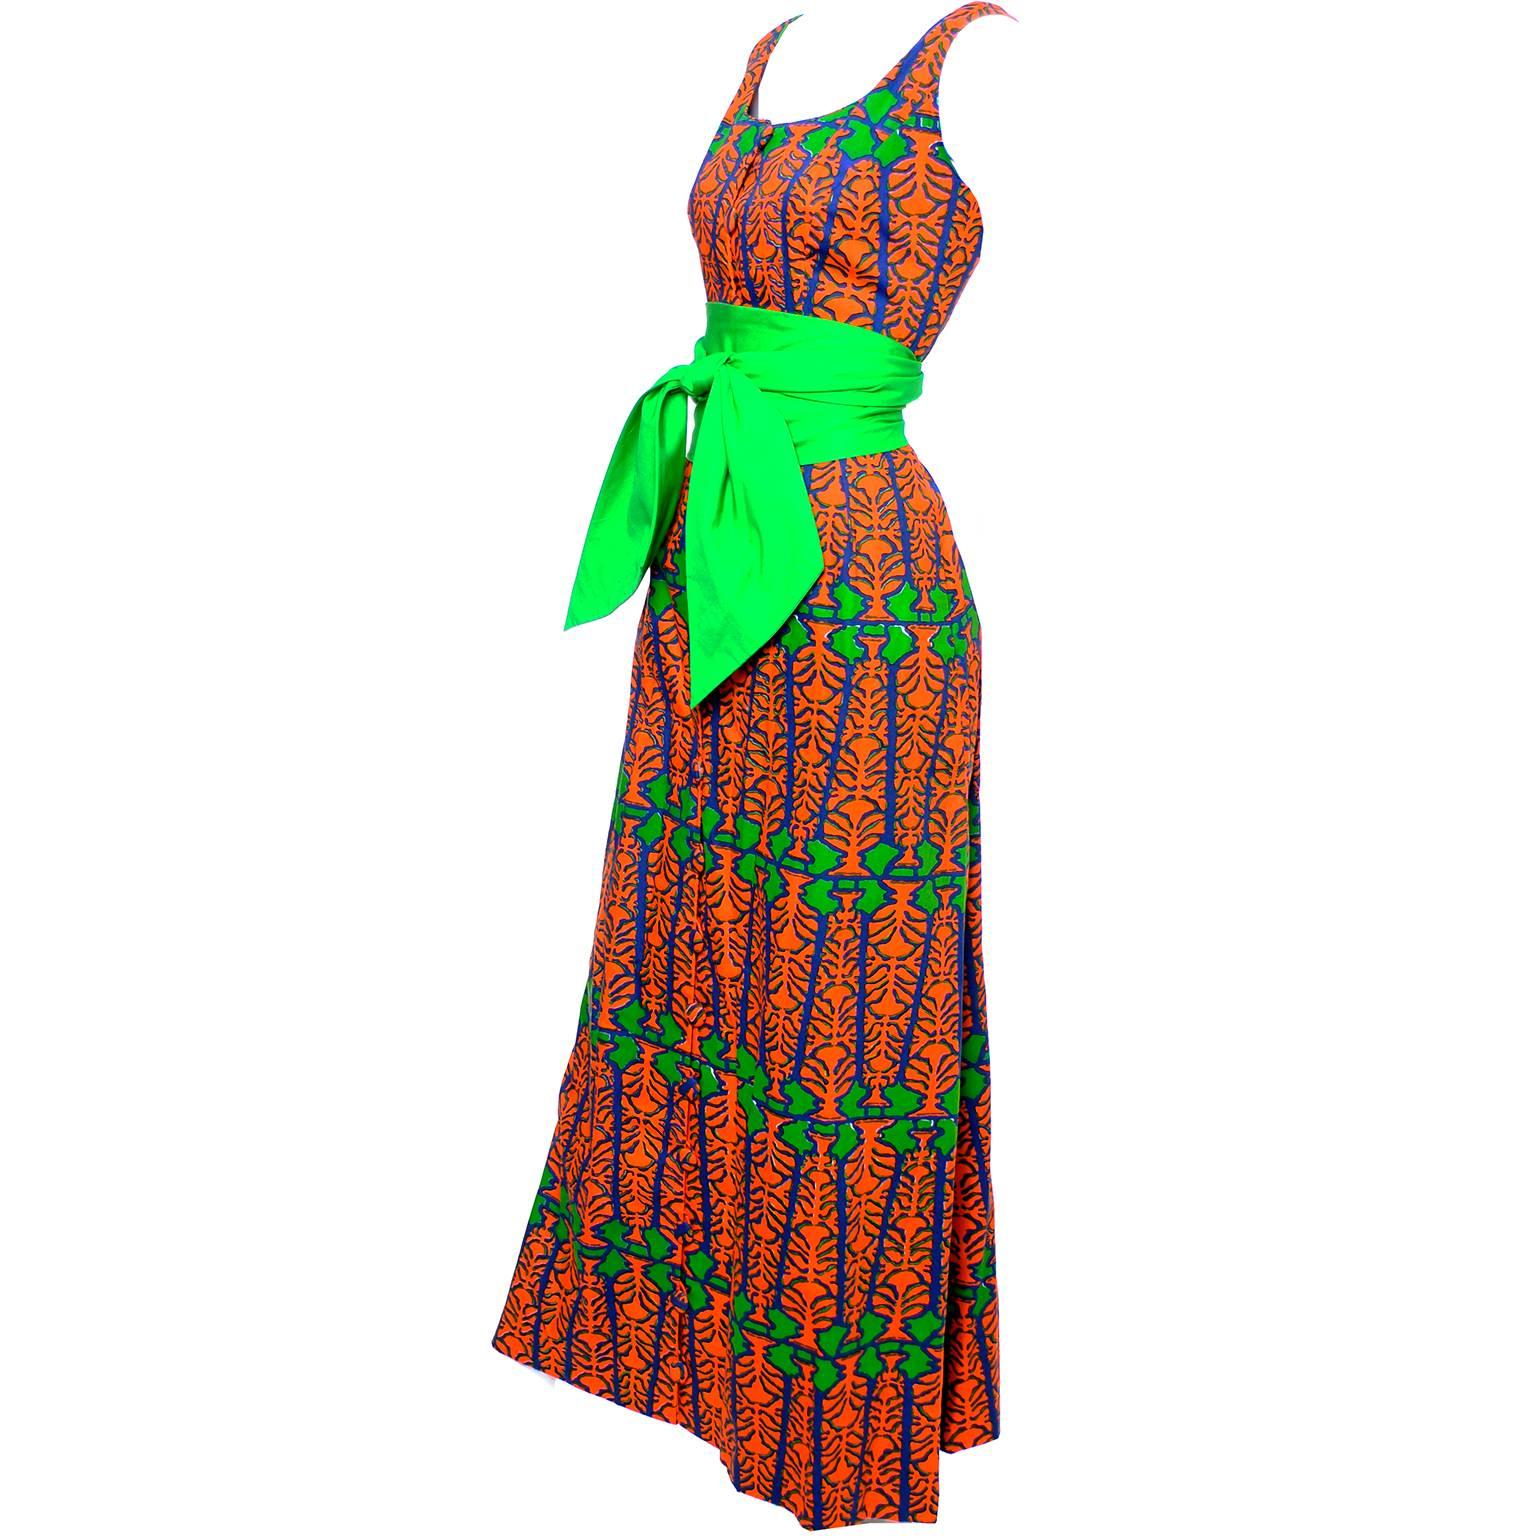 Design Thai Vintage Dress in Blue Green & Orange Cotton Tropical Print Size 6/8